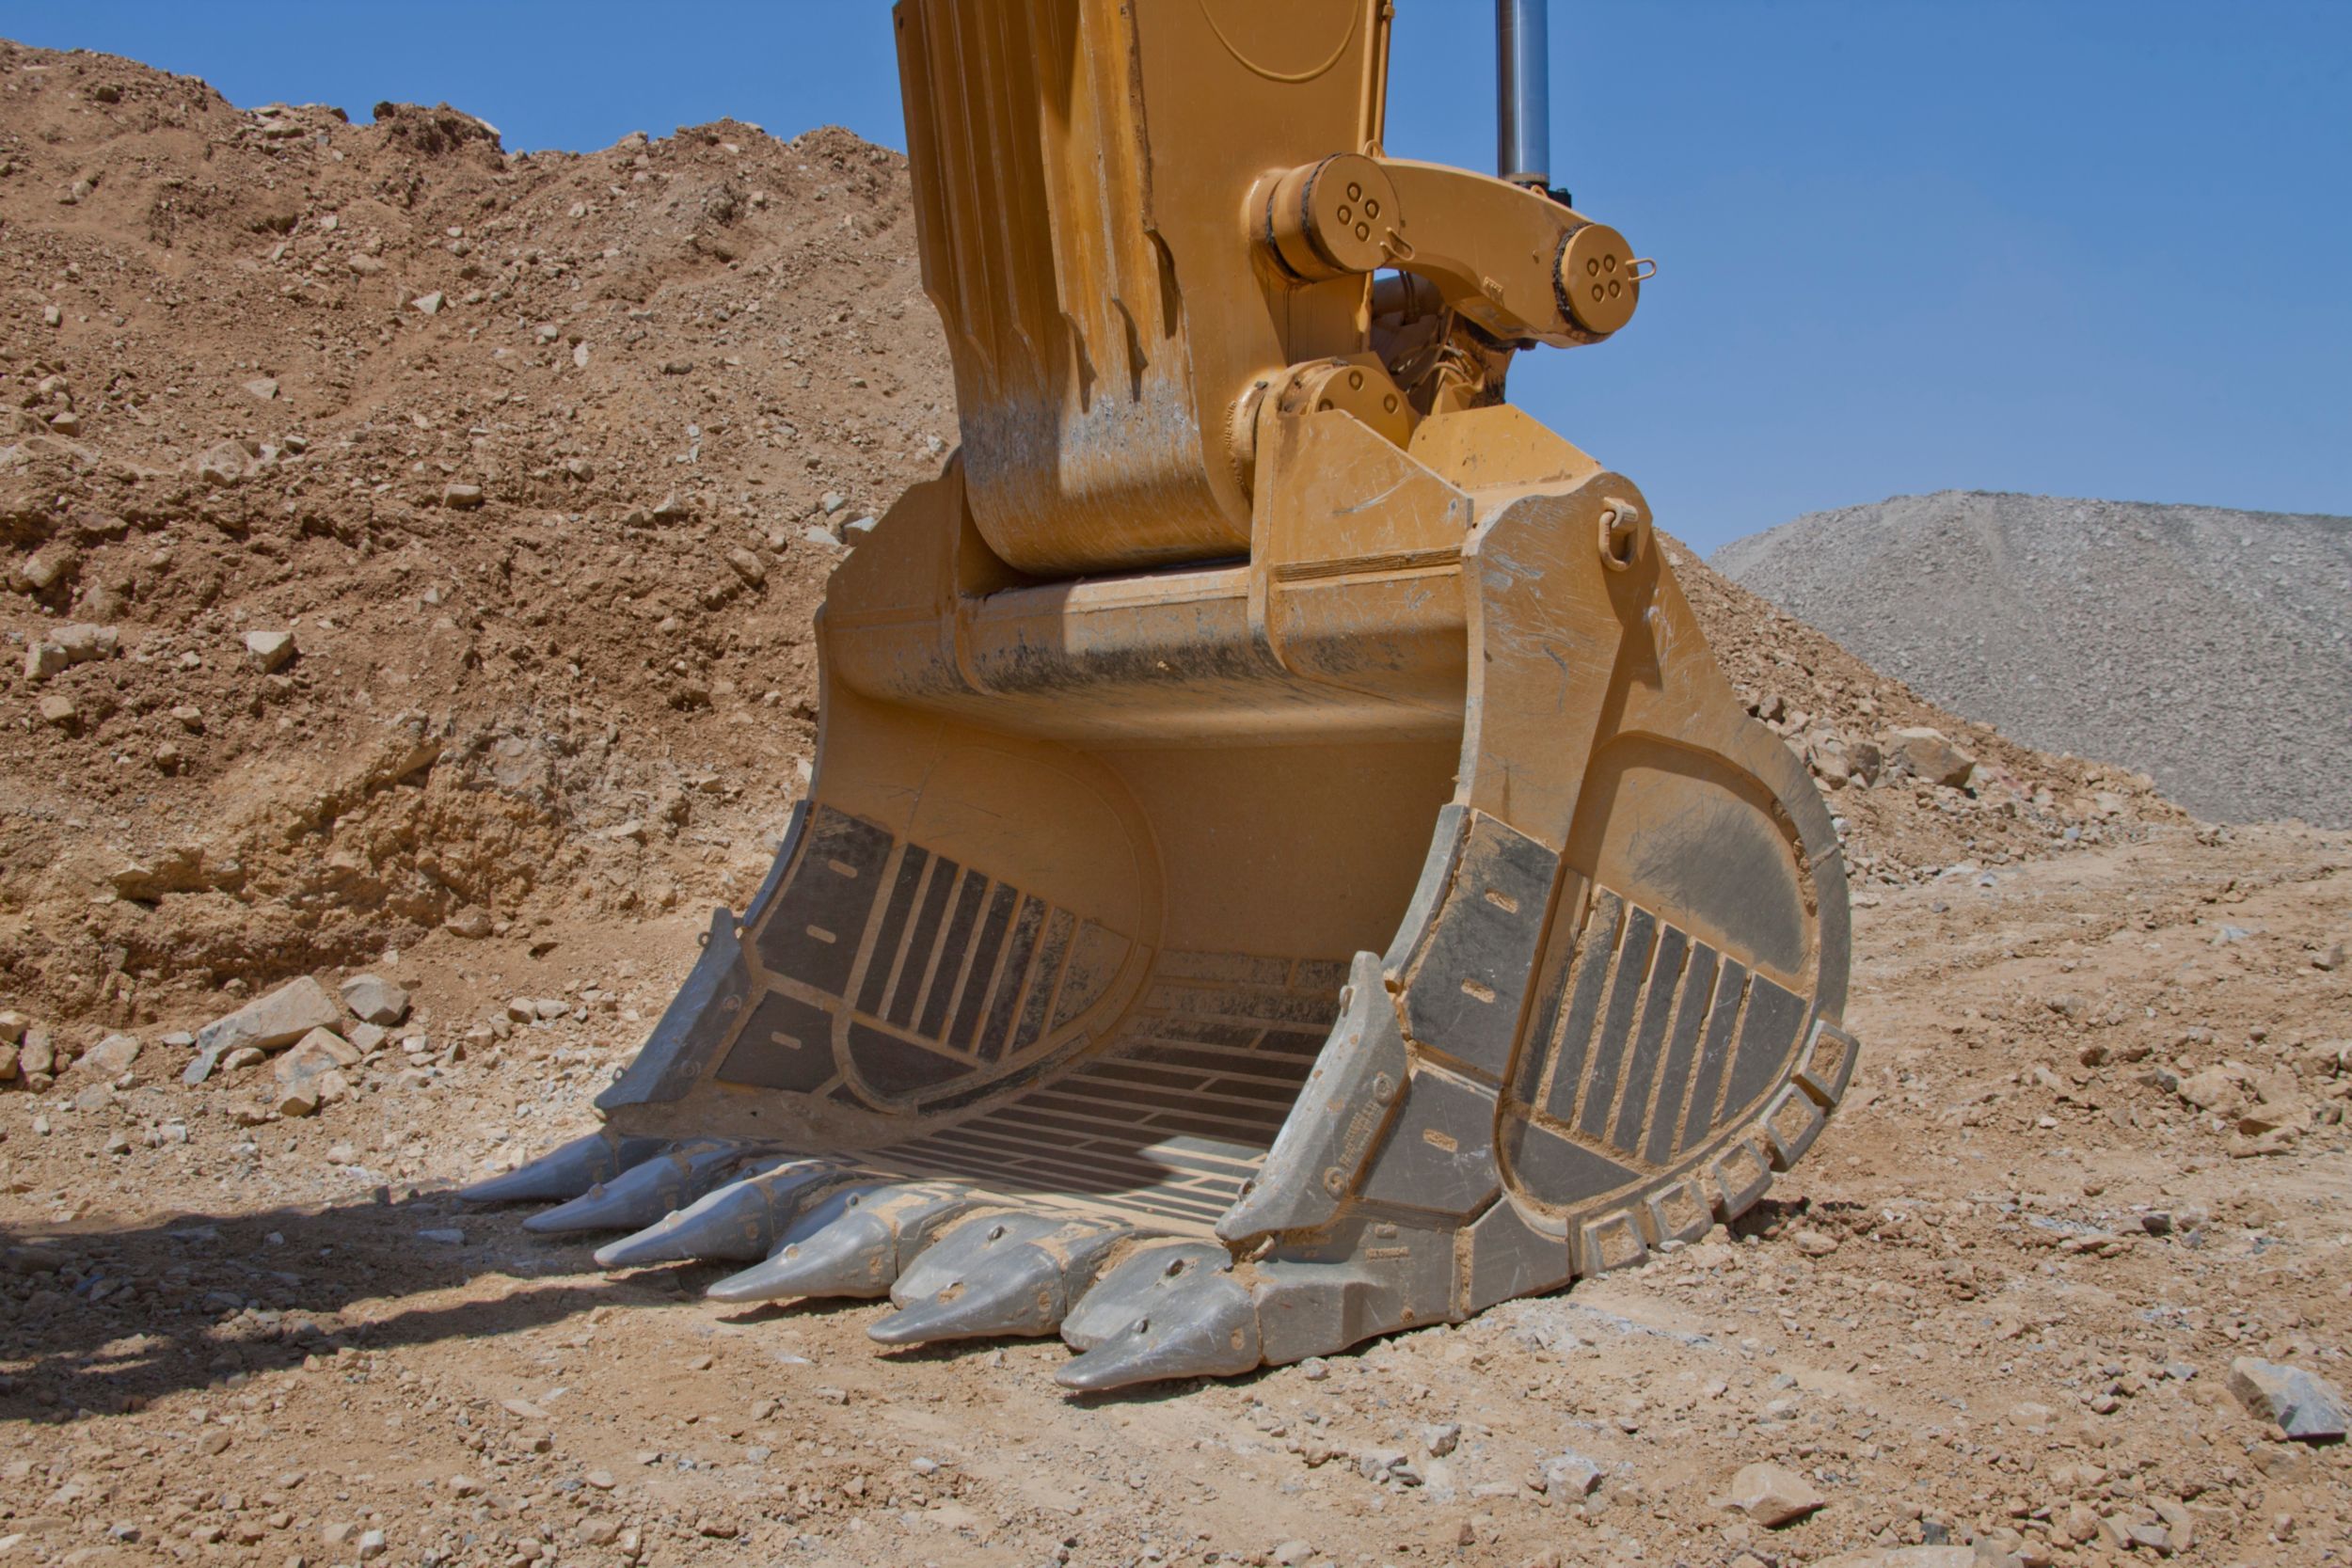 9m³ (11.8yd³) Heavy Rock bucket for the 6020B Hyd Mining Shovel